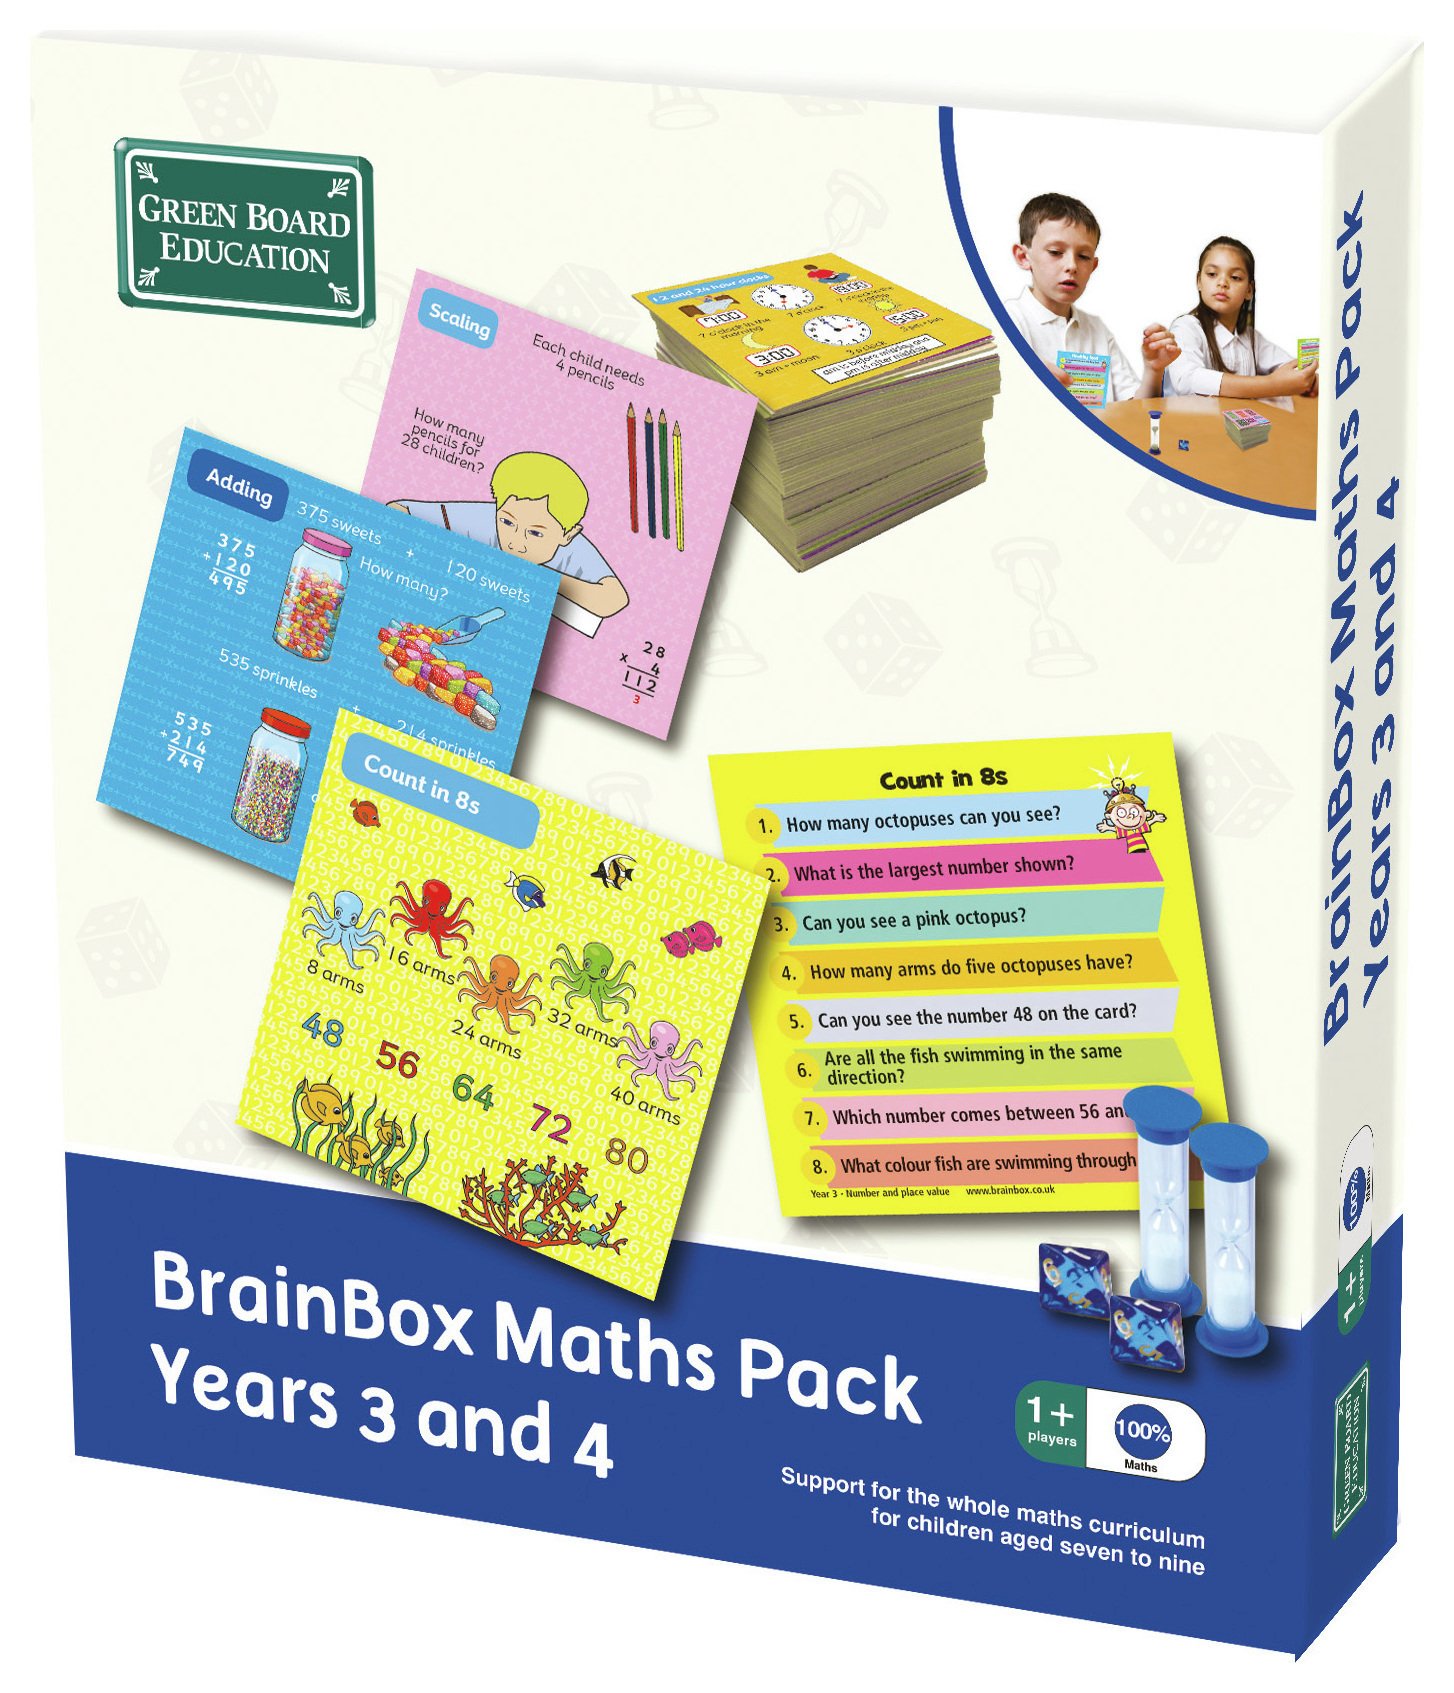 Brainbox Maths Pack - Years 3 and 4